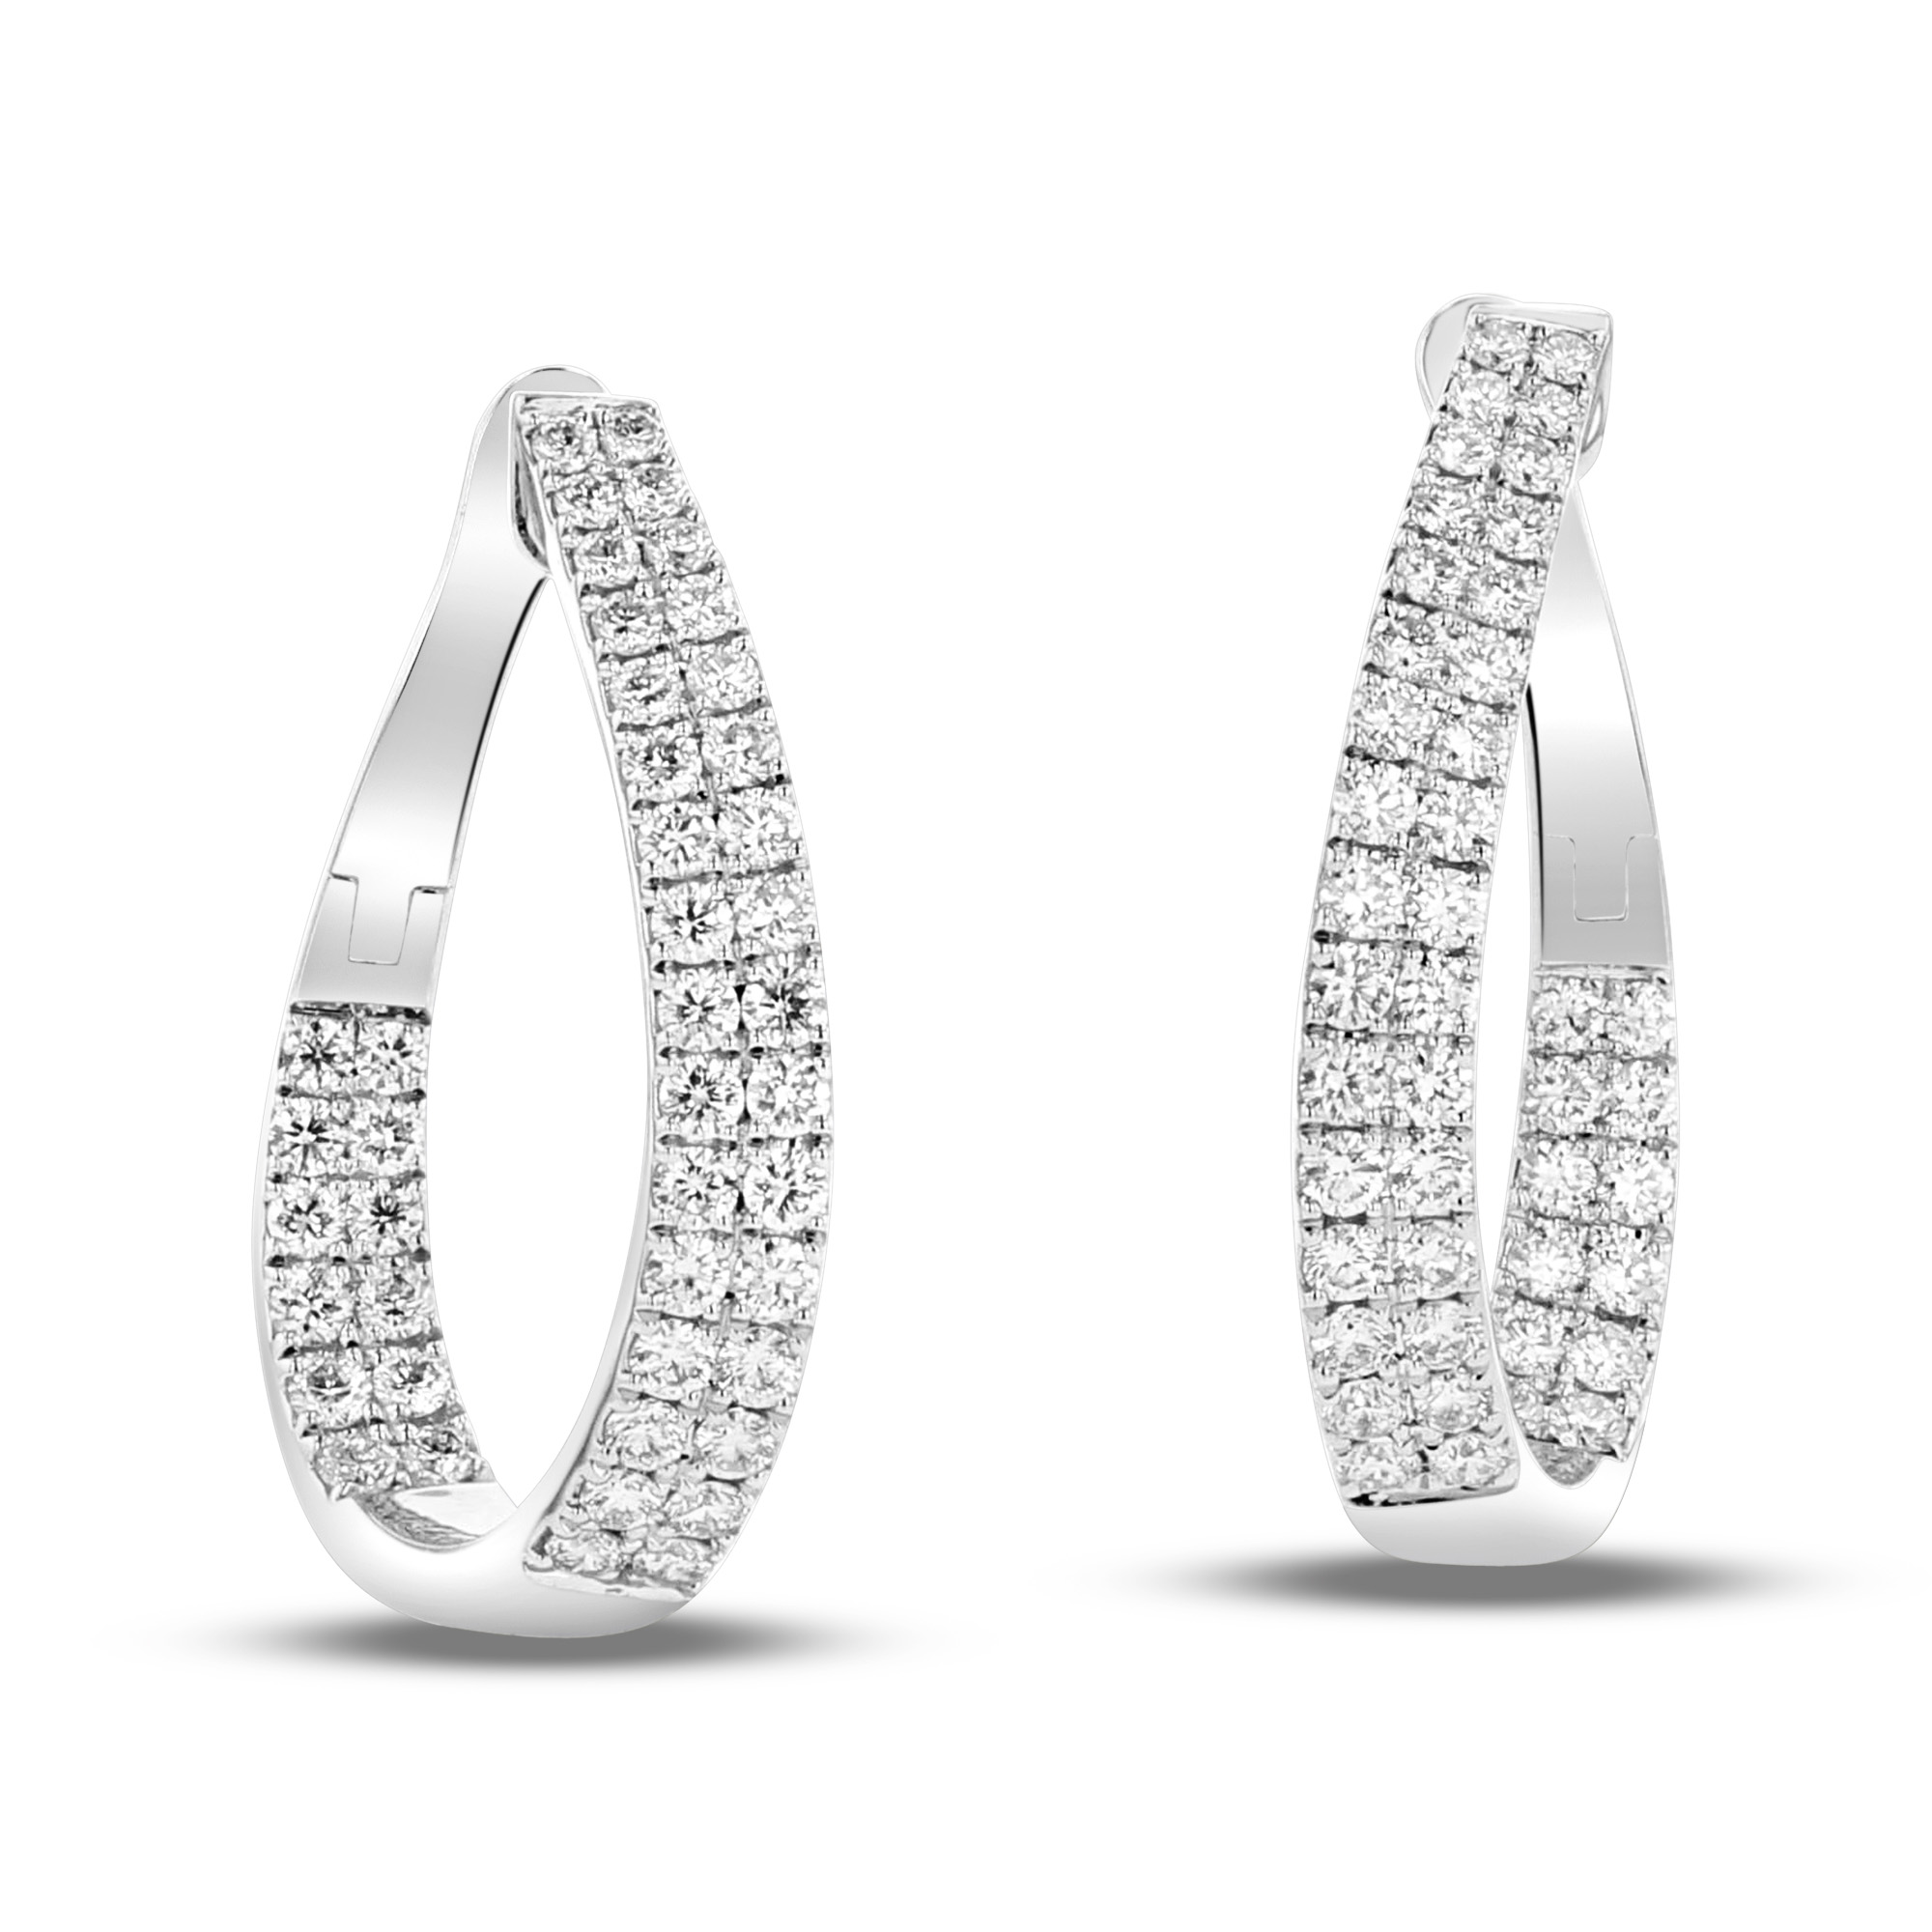 View 1.13ctw Diamond Fashion Hoop Earrings in 18k White Gold